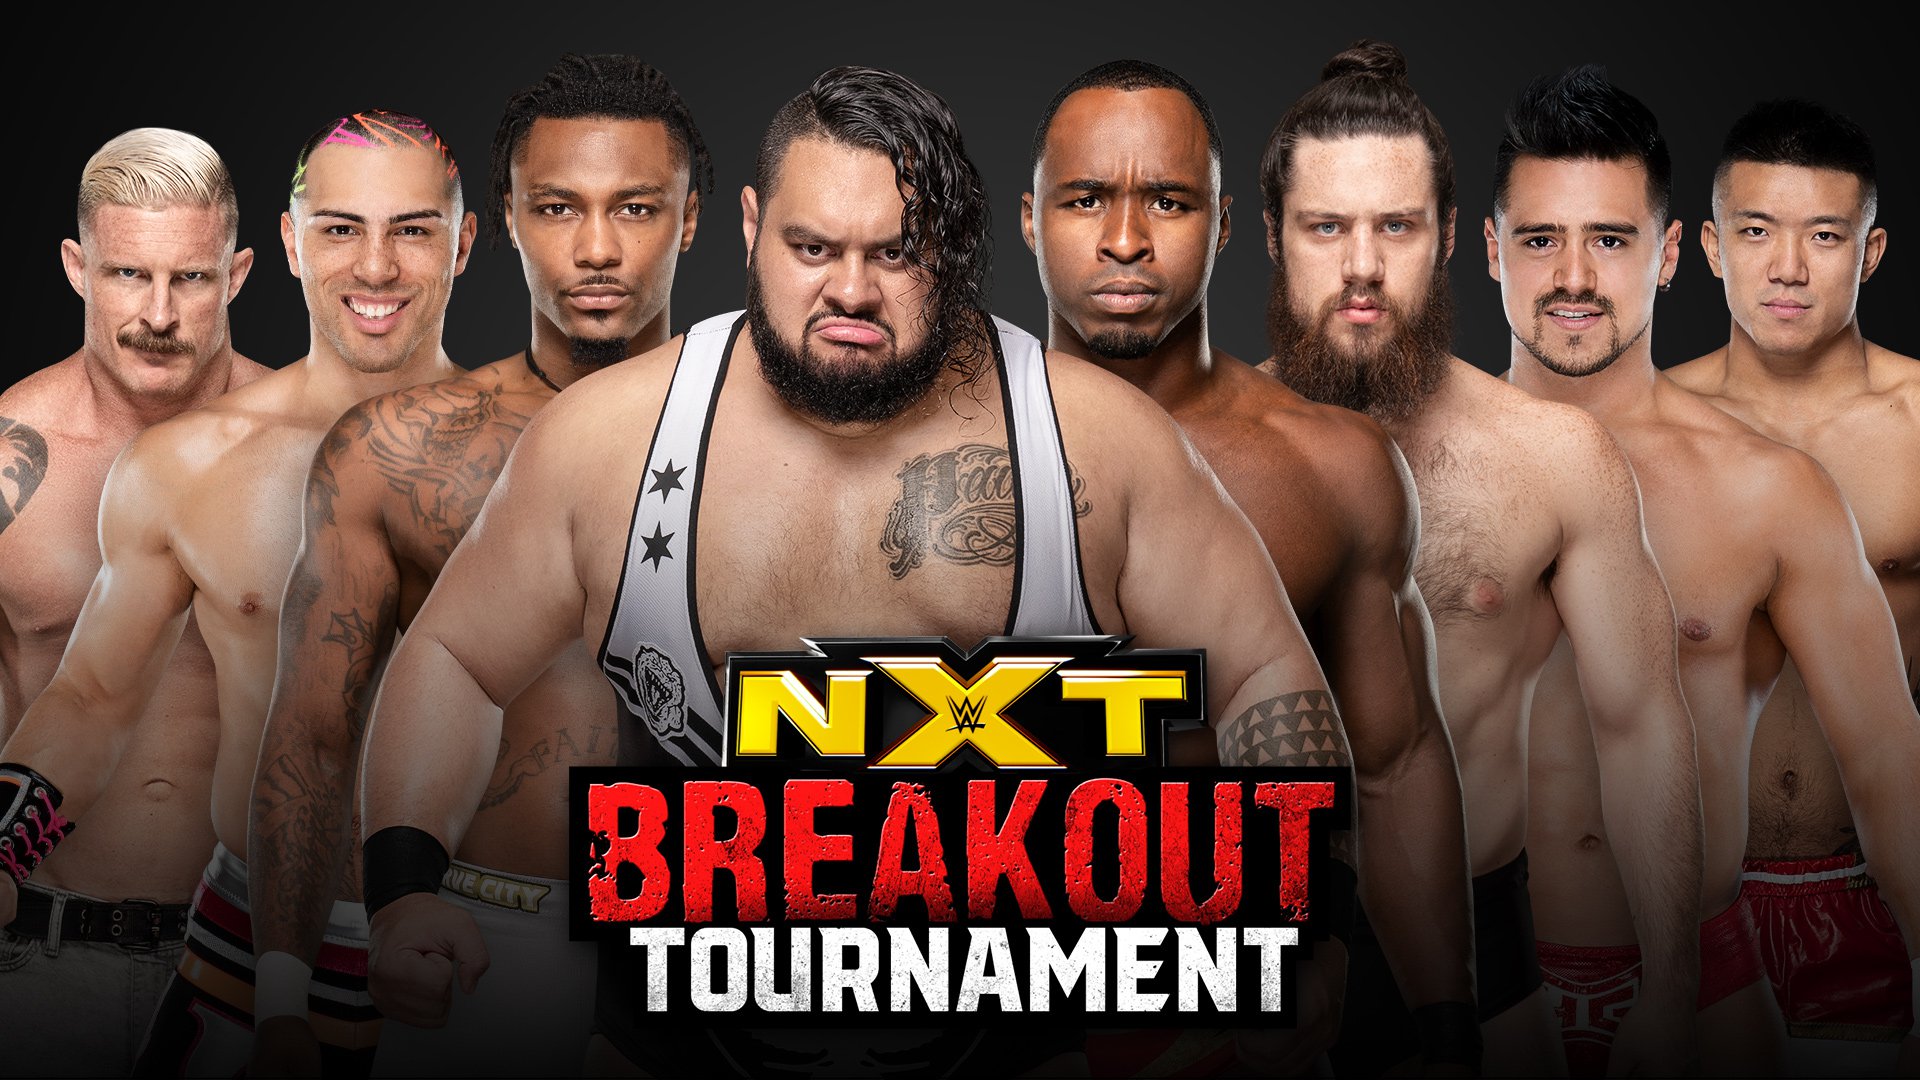 NXT Breakout Tournament bracket Big Gold Belt Media Entertainment